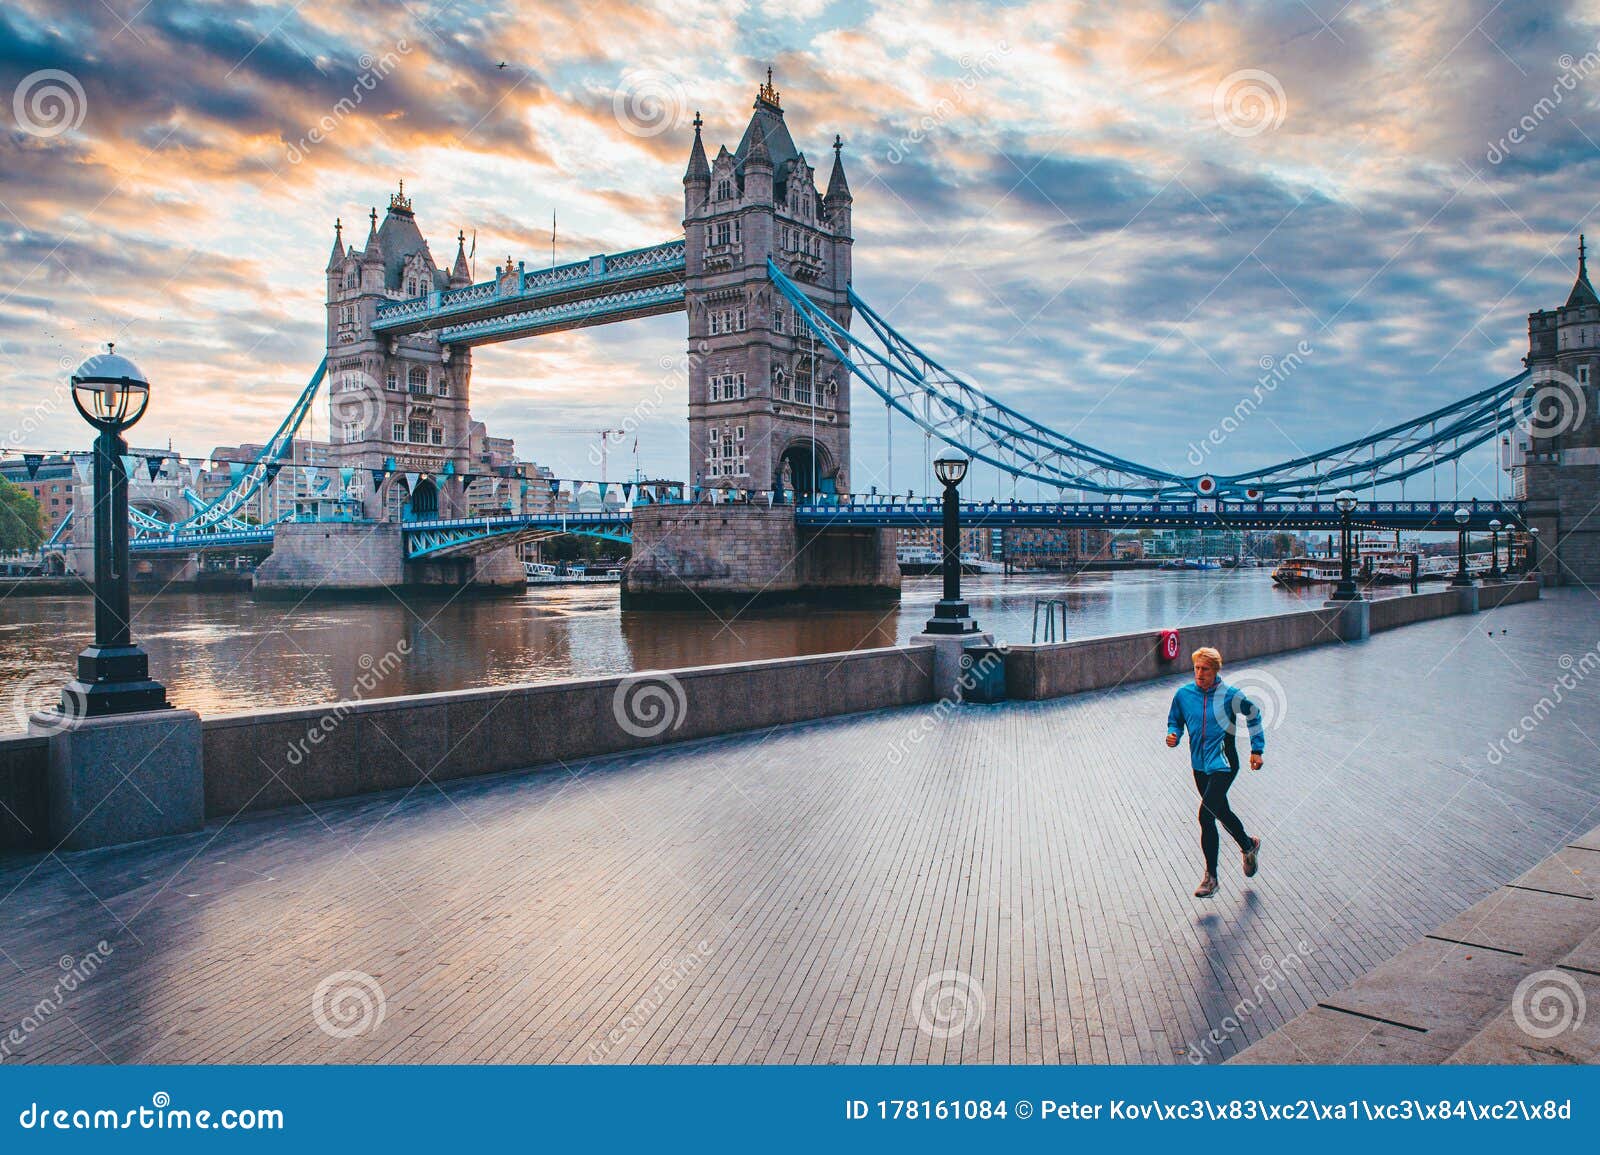 alone runner in empty streets of london in coronavirus, covid-19 quarantine time. tower bridge in background